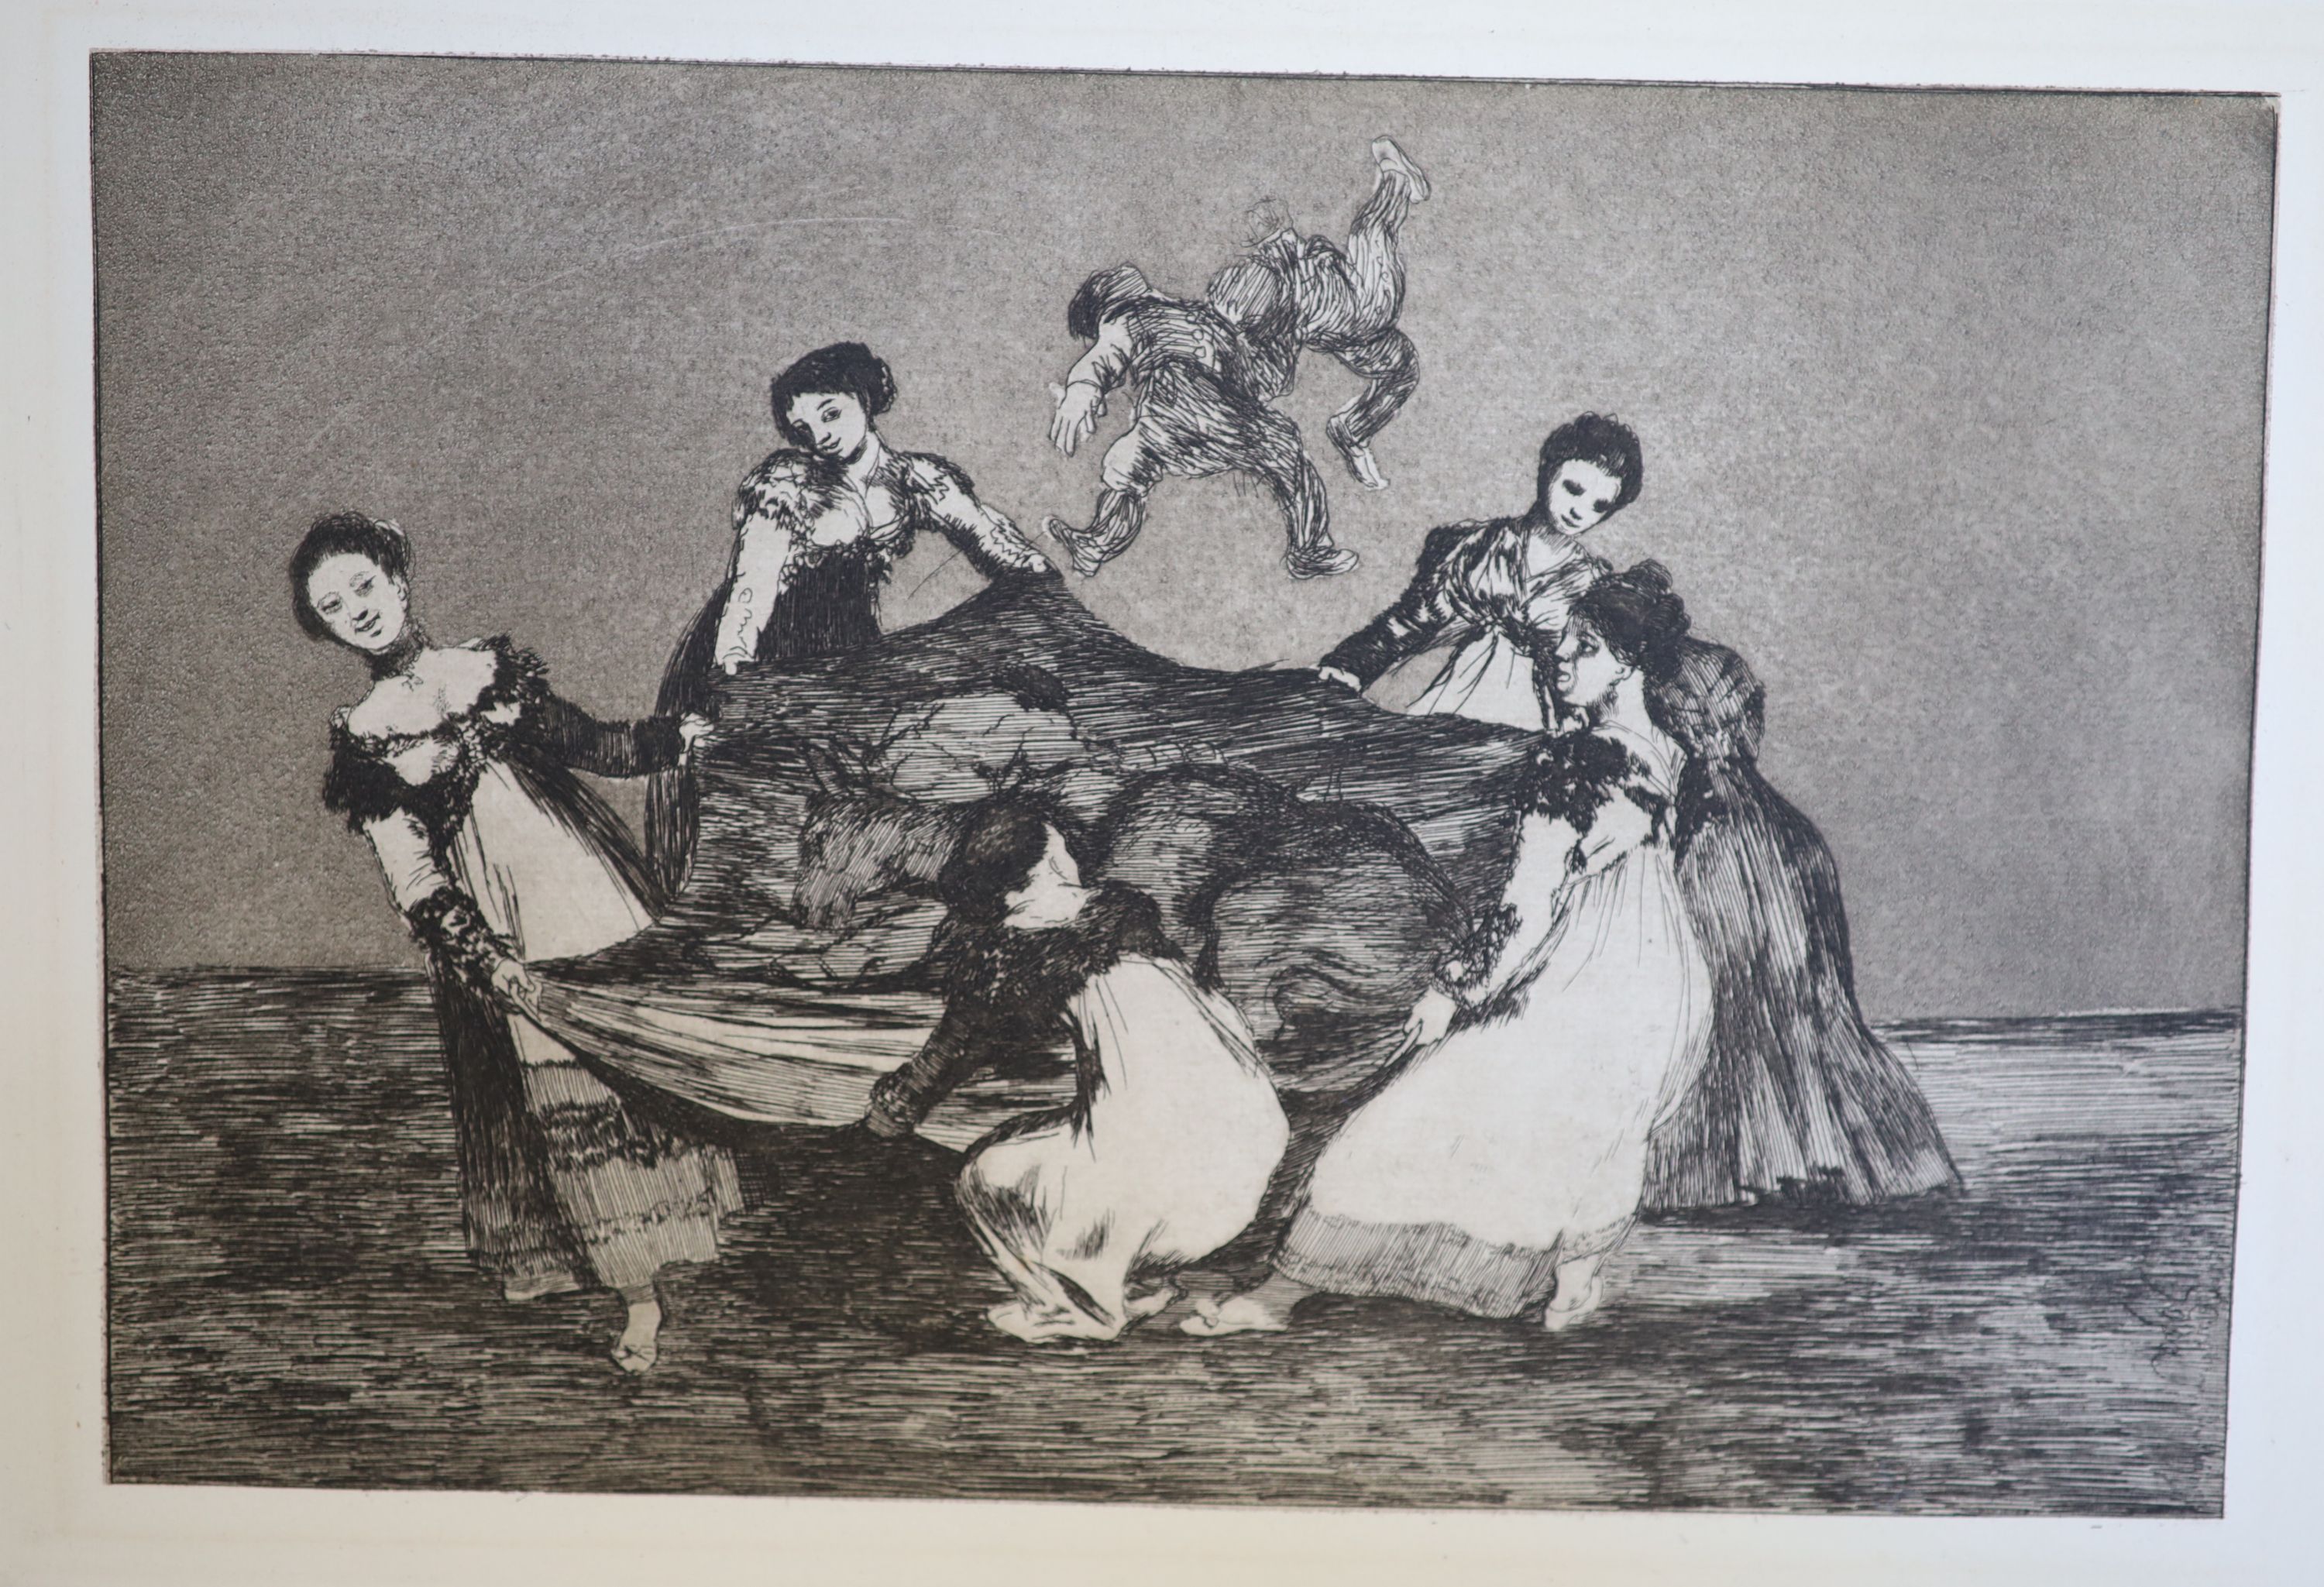 Francisco De Goya (Spanish, 1746-1828), Disparate feminino (Feminine Folly), from Los Proverbios, Etching and aquatint